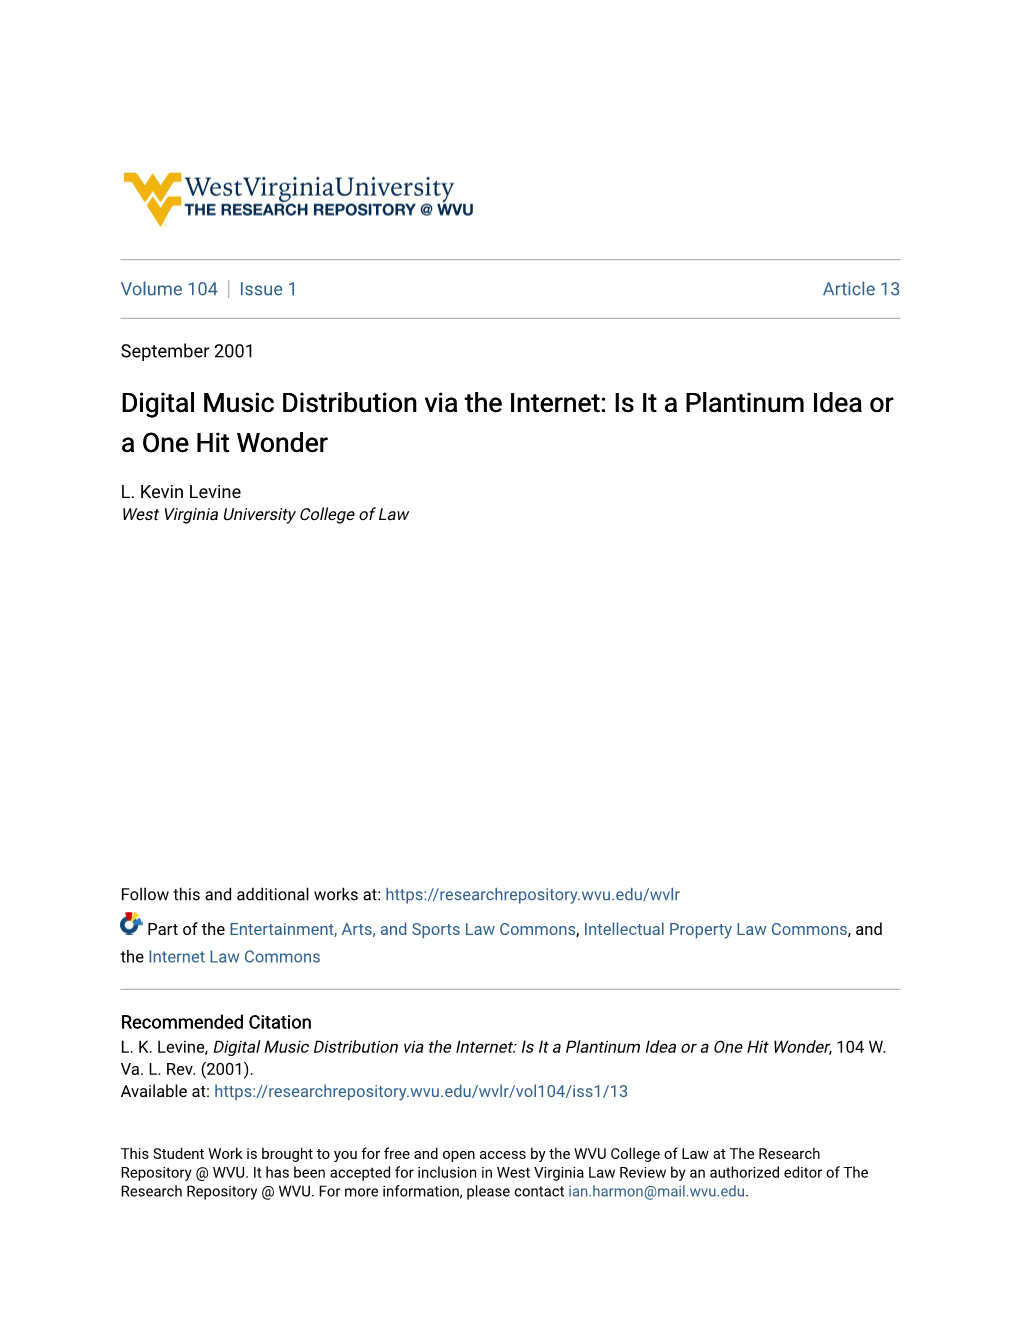 Digital Music Distribution Via the Internet: Is It a Plantinum Idea Or a One Hit Wonder